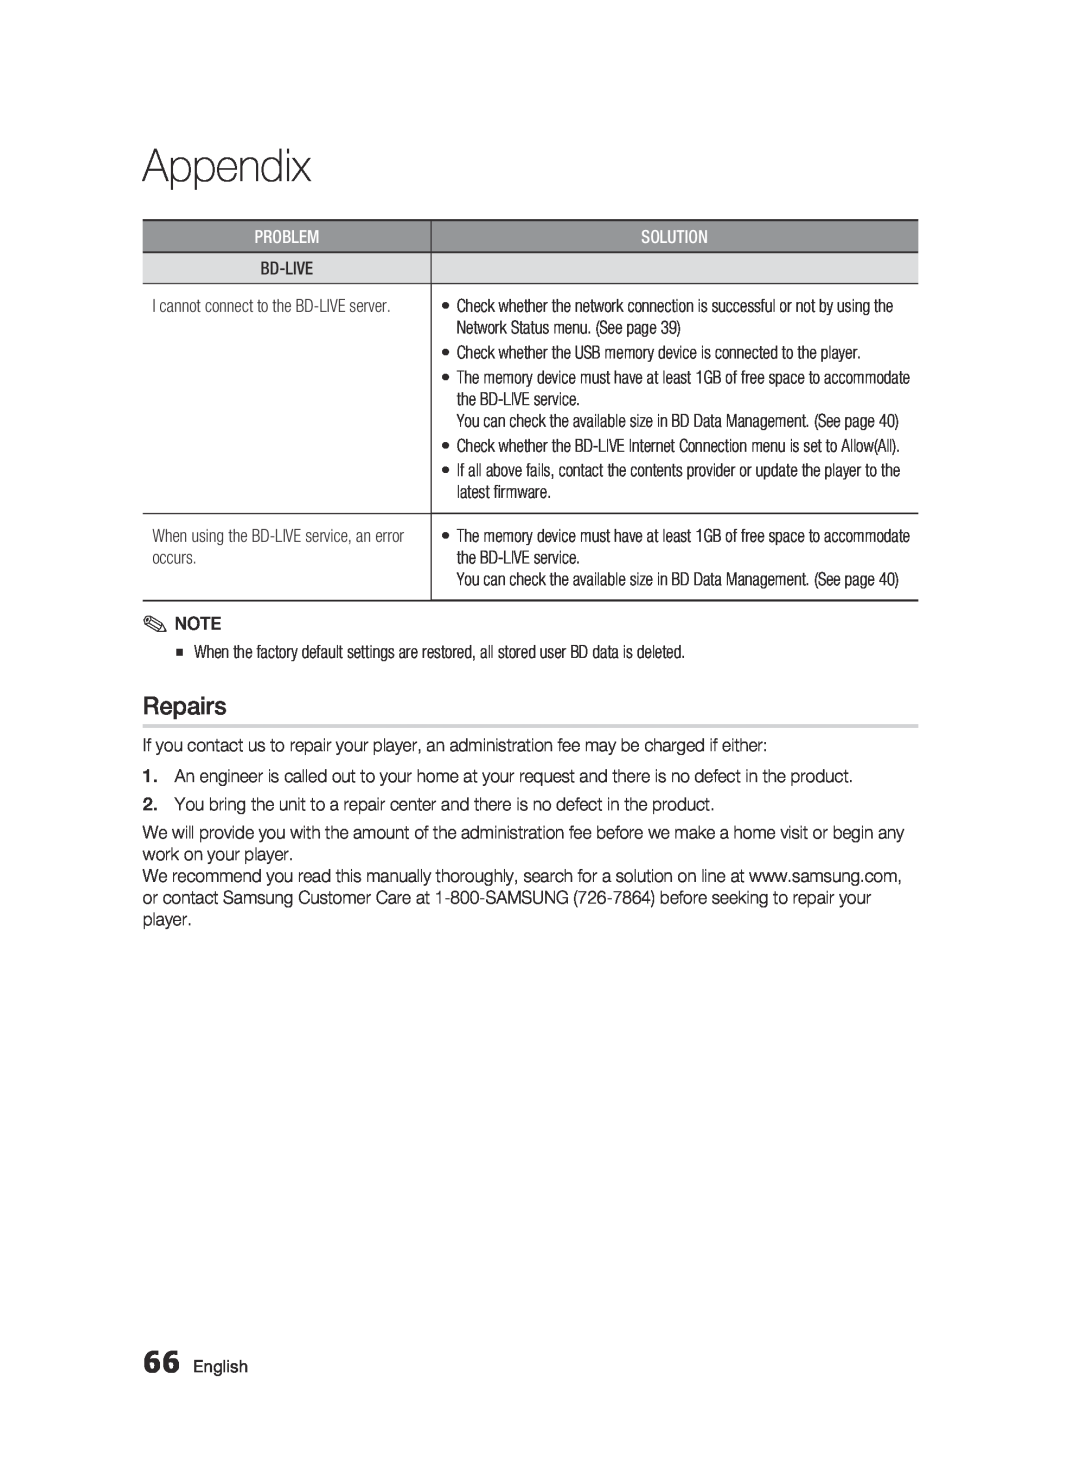 Samsung BD-D6500 user manual Repairs, Appendix, Solution, English 